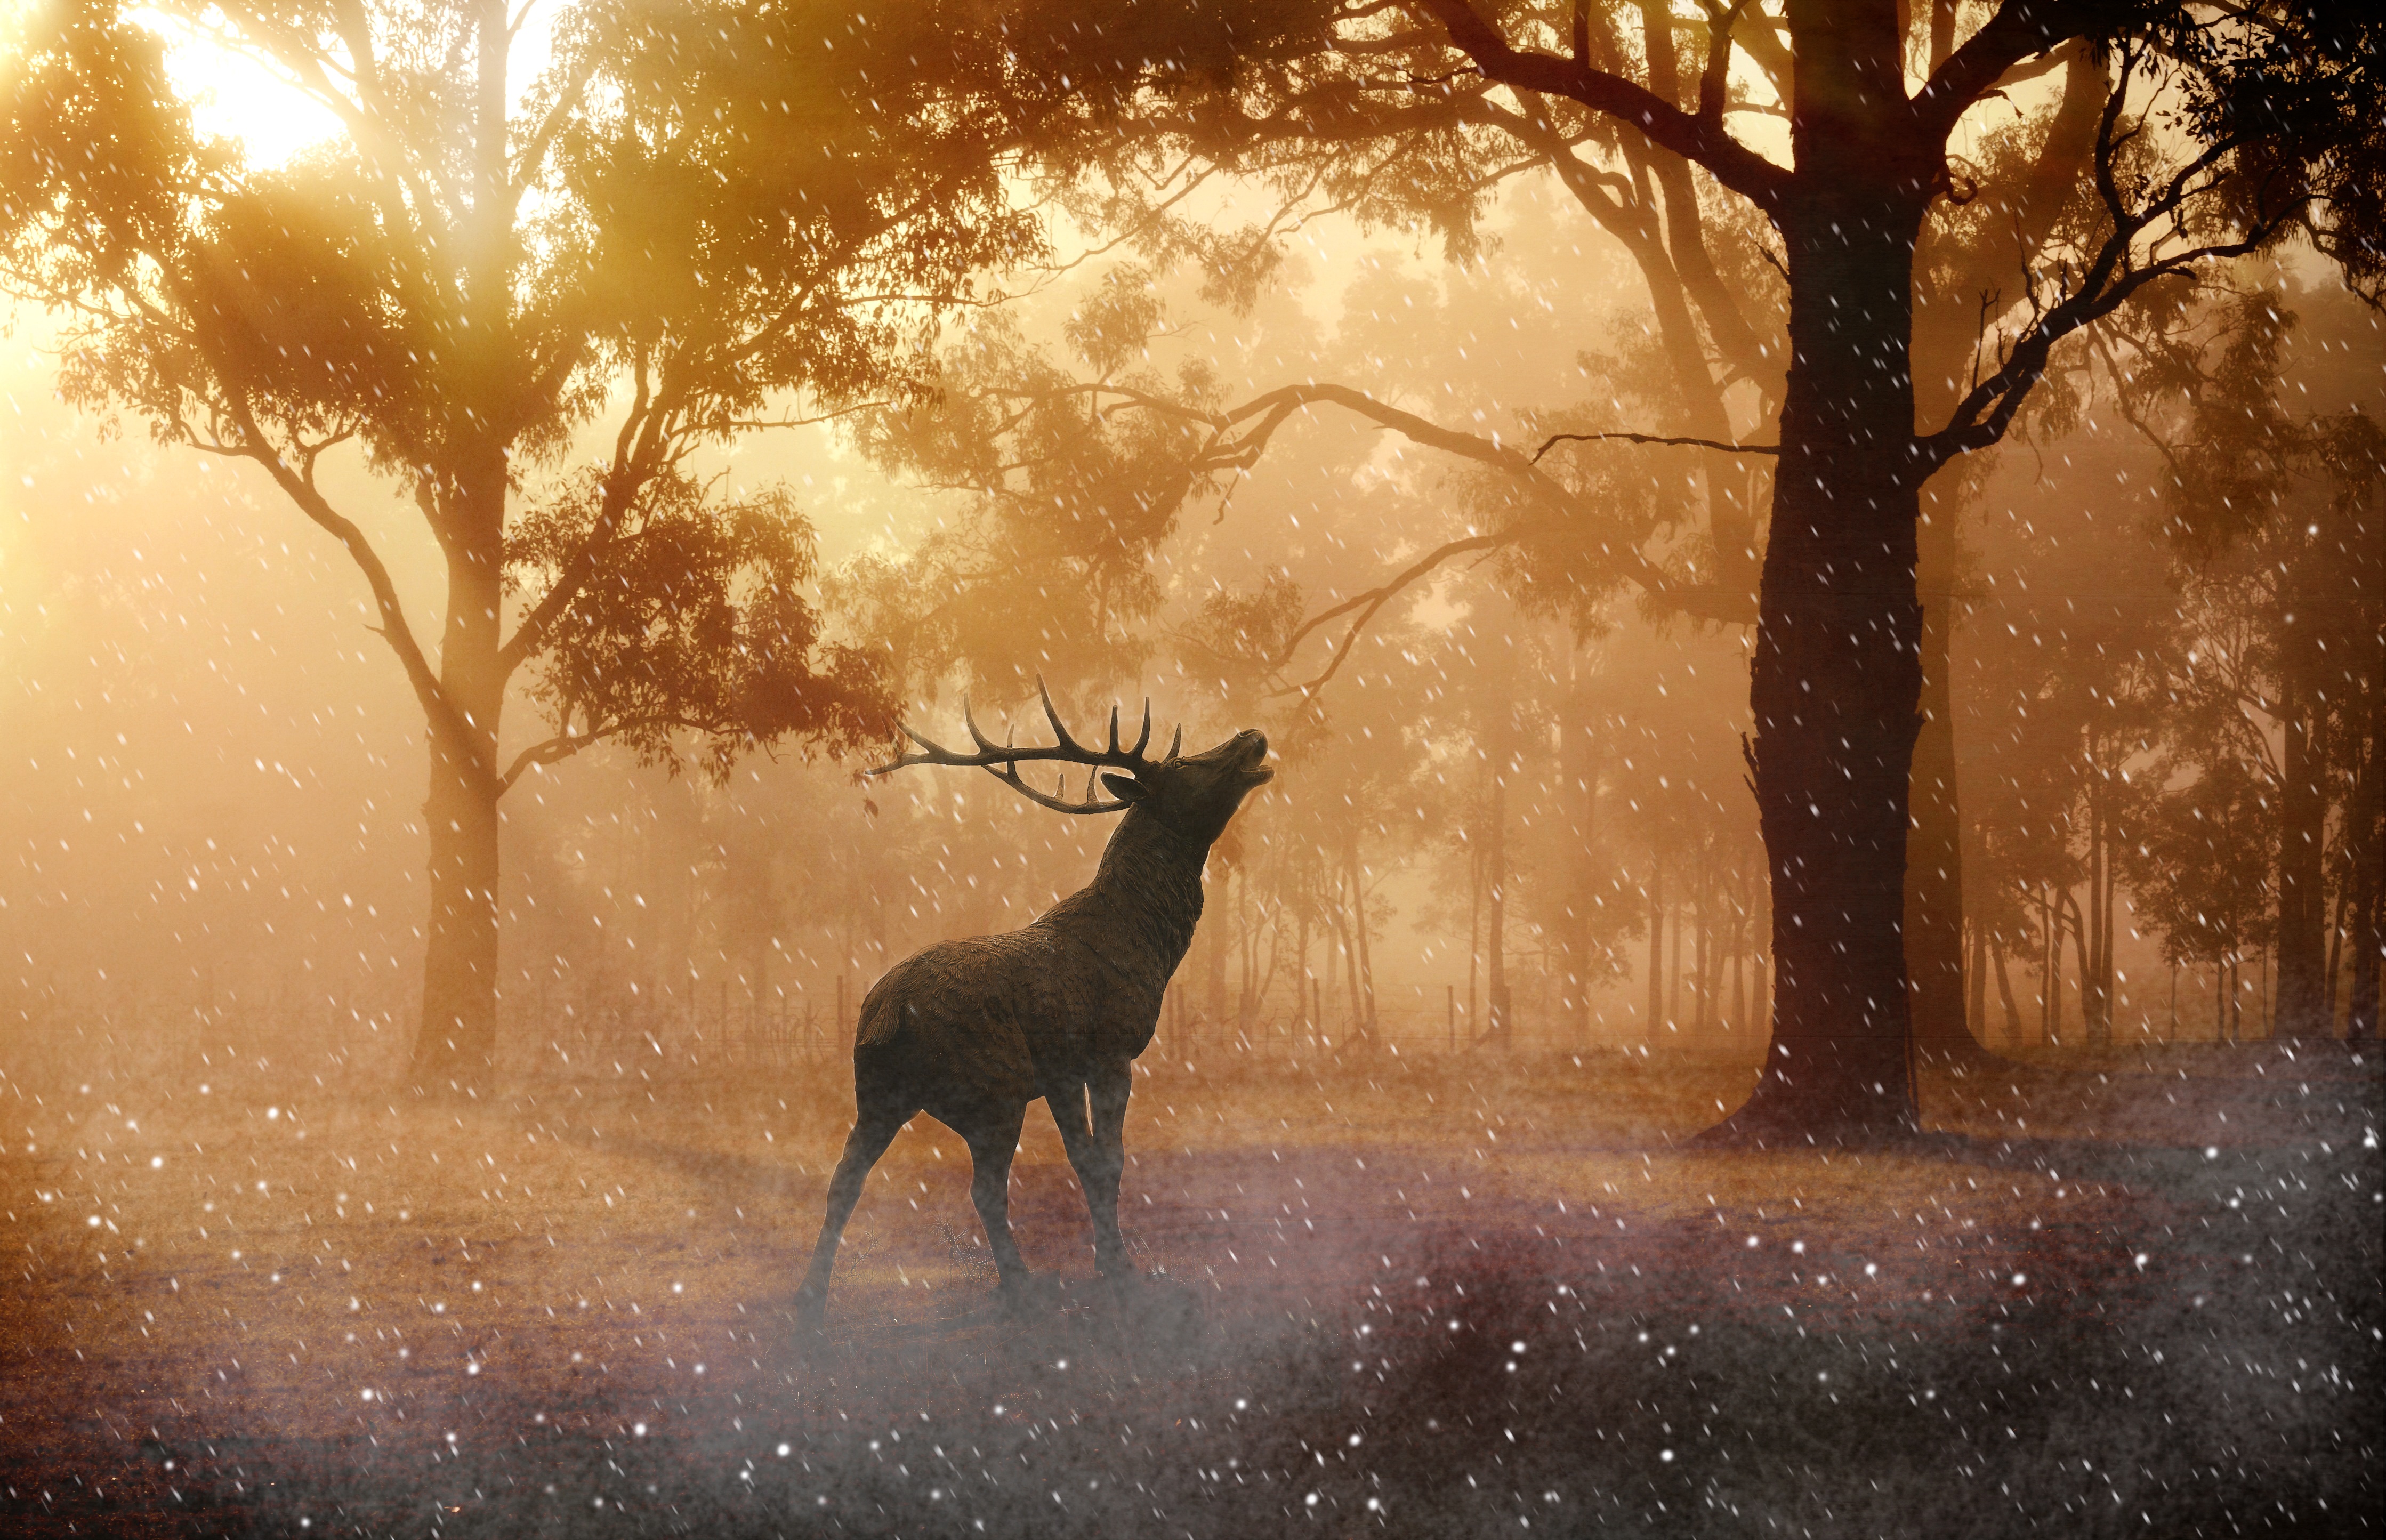 Hirsch, Animal, Deer, Forest, Jungle, HQ Photo